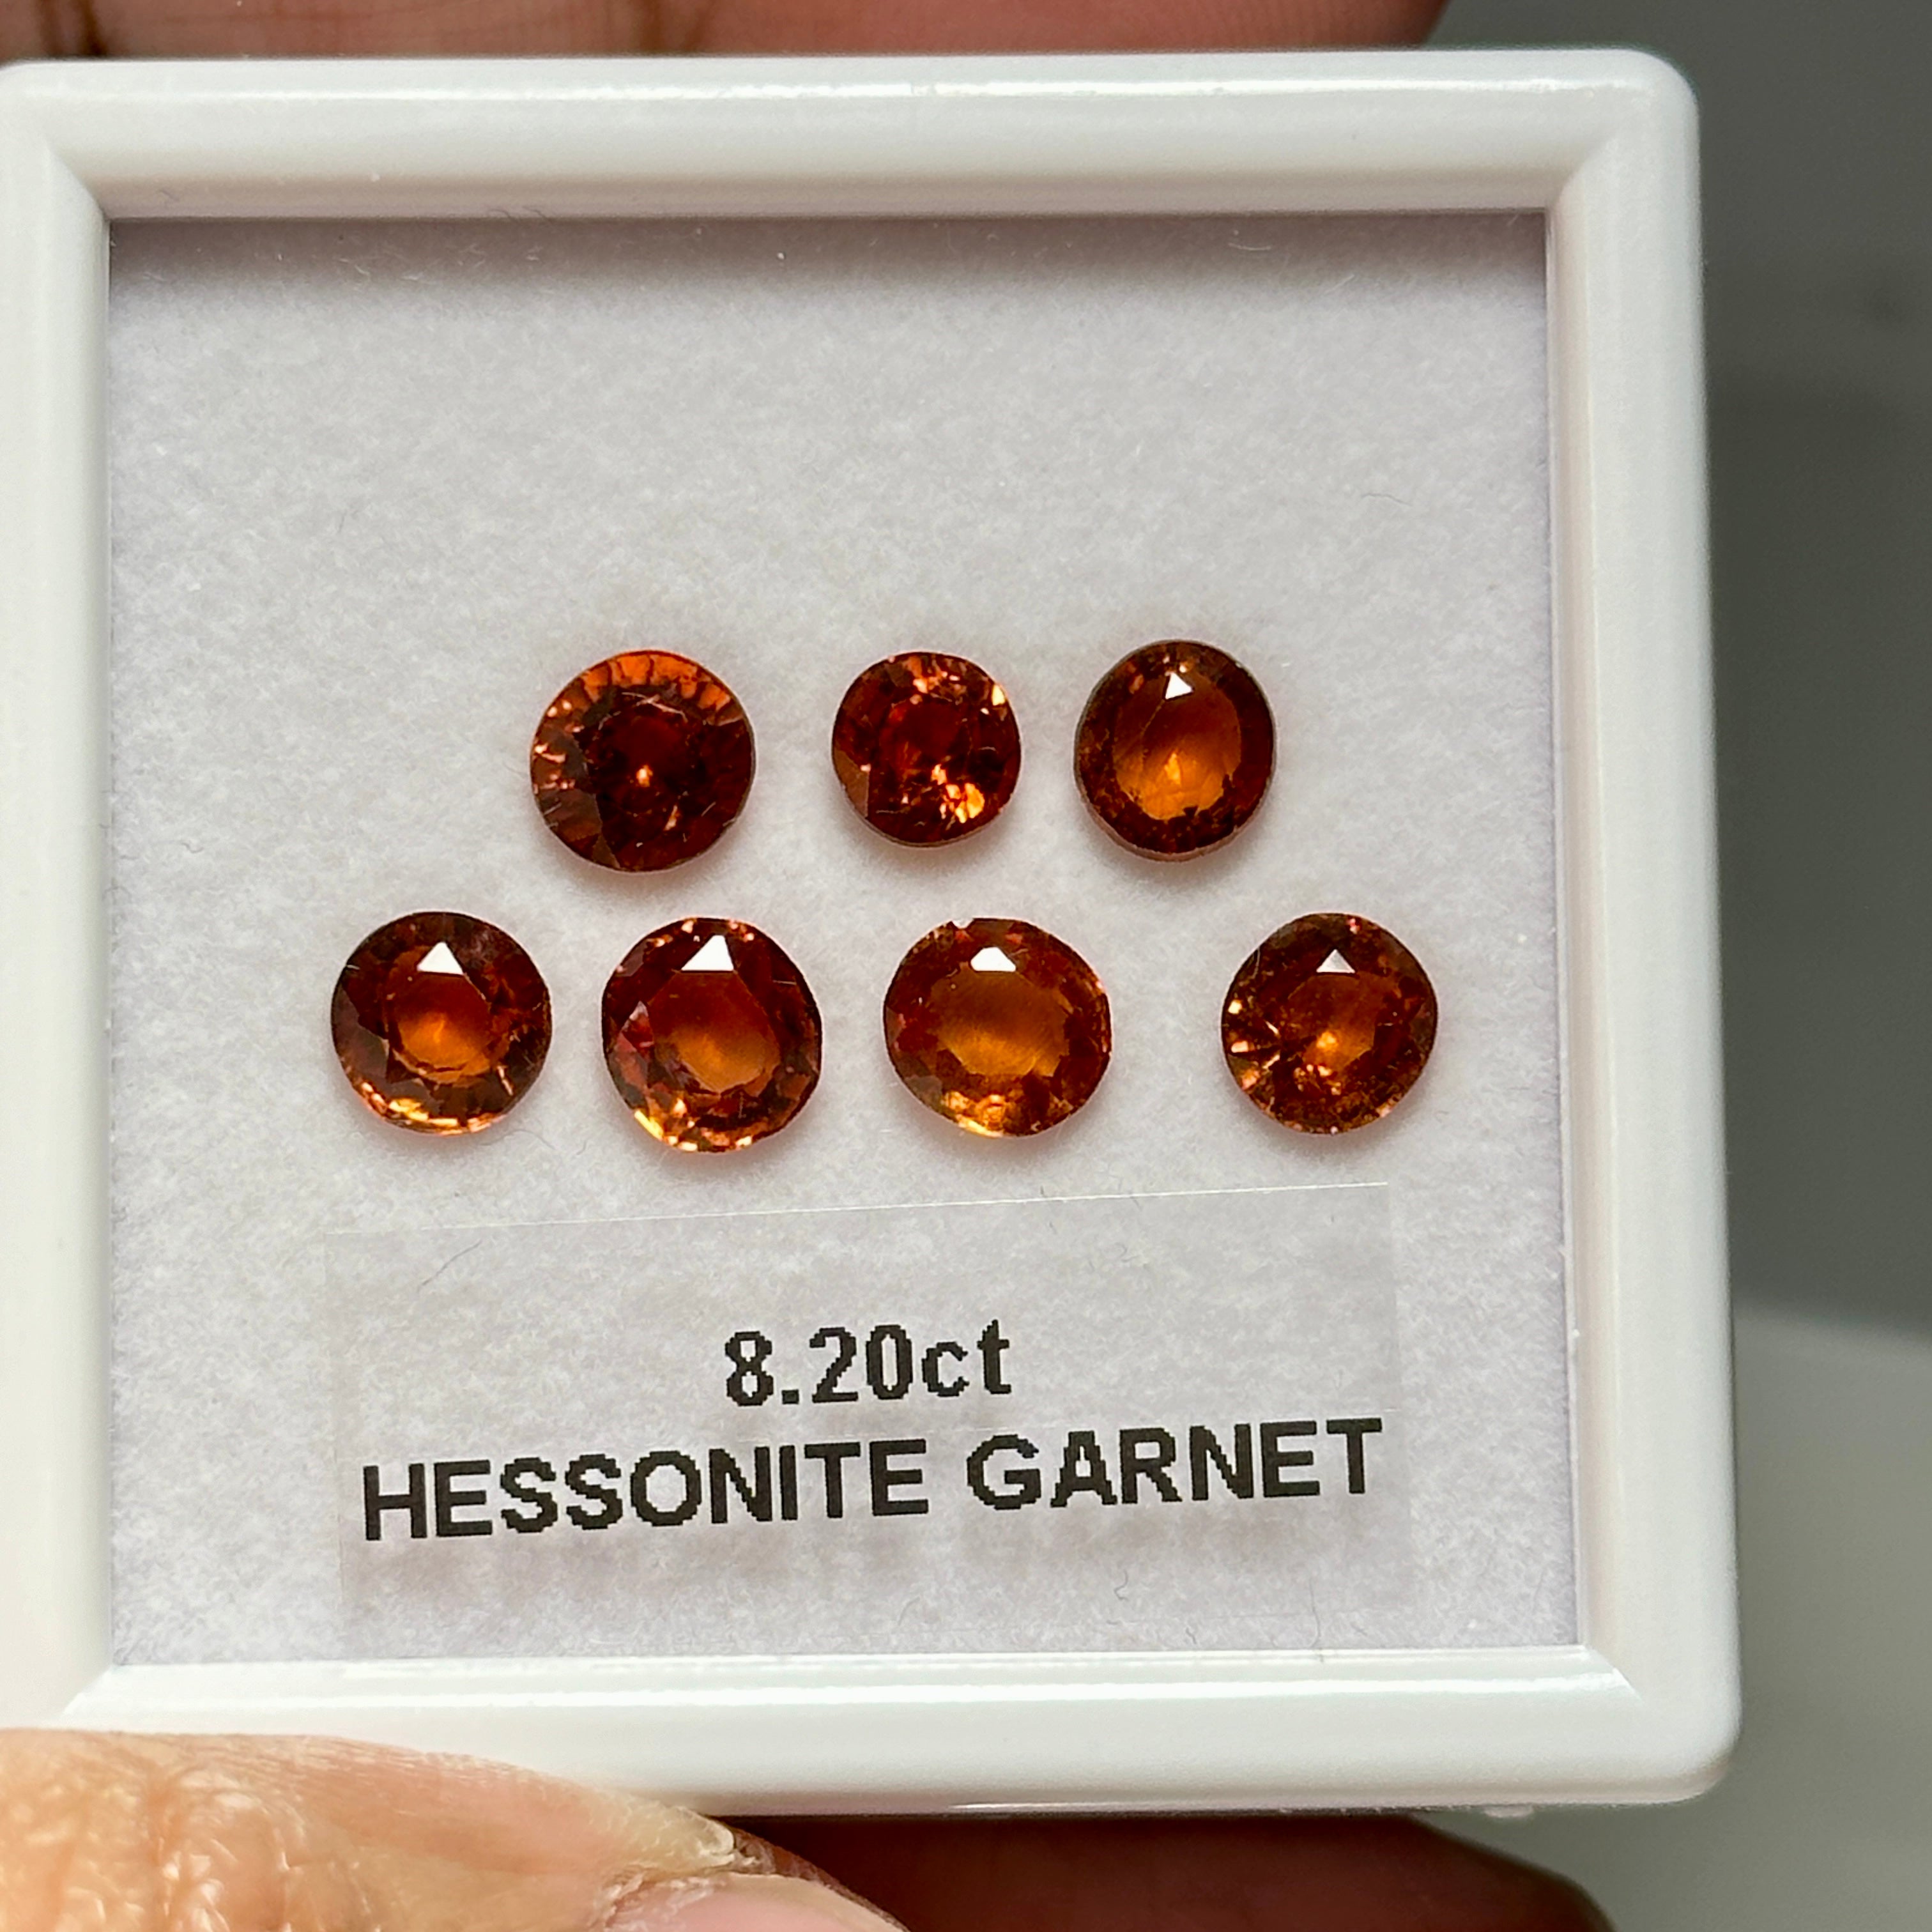 8.20ct Hessonite Garnet Lot, Untreated Unheated, native cut